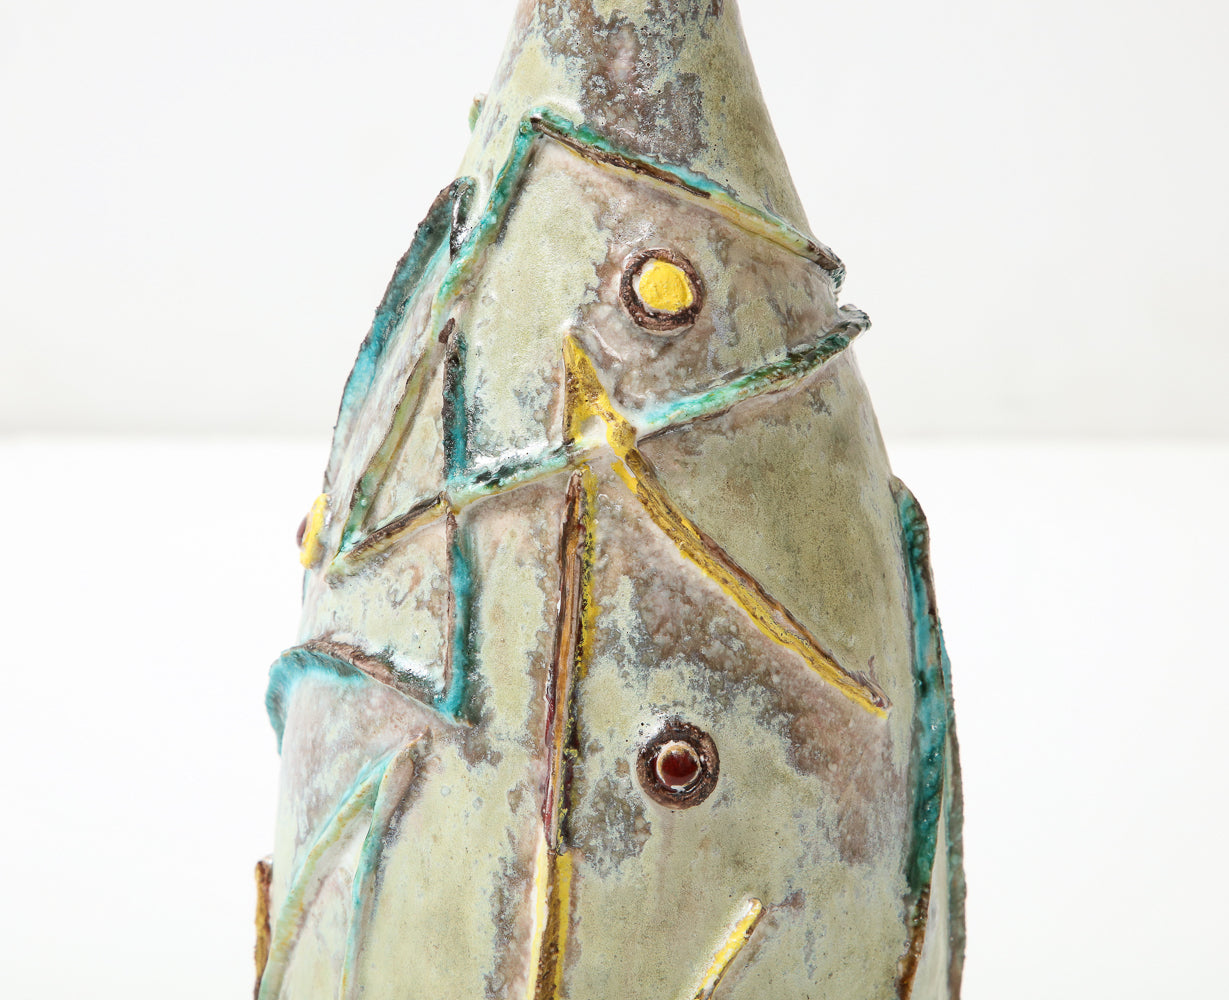 Ceramic Bottle by Umberto Zannoni